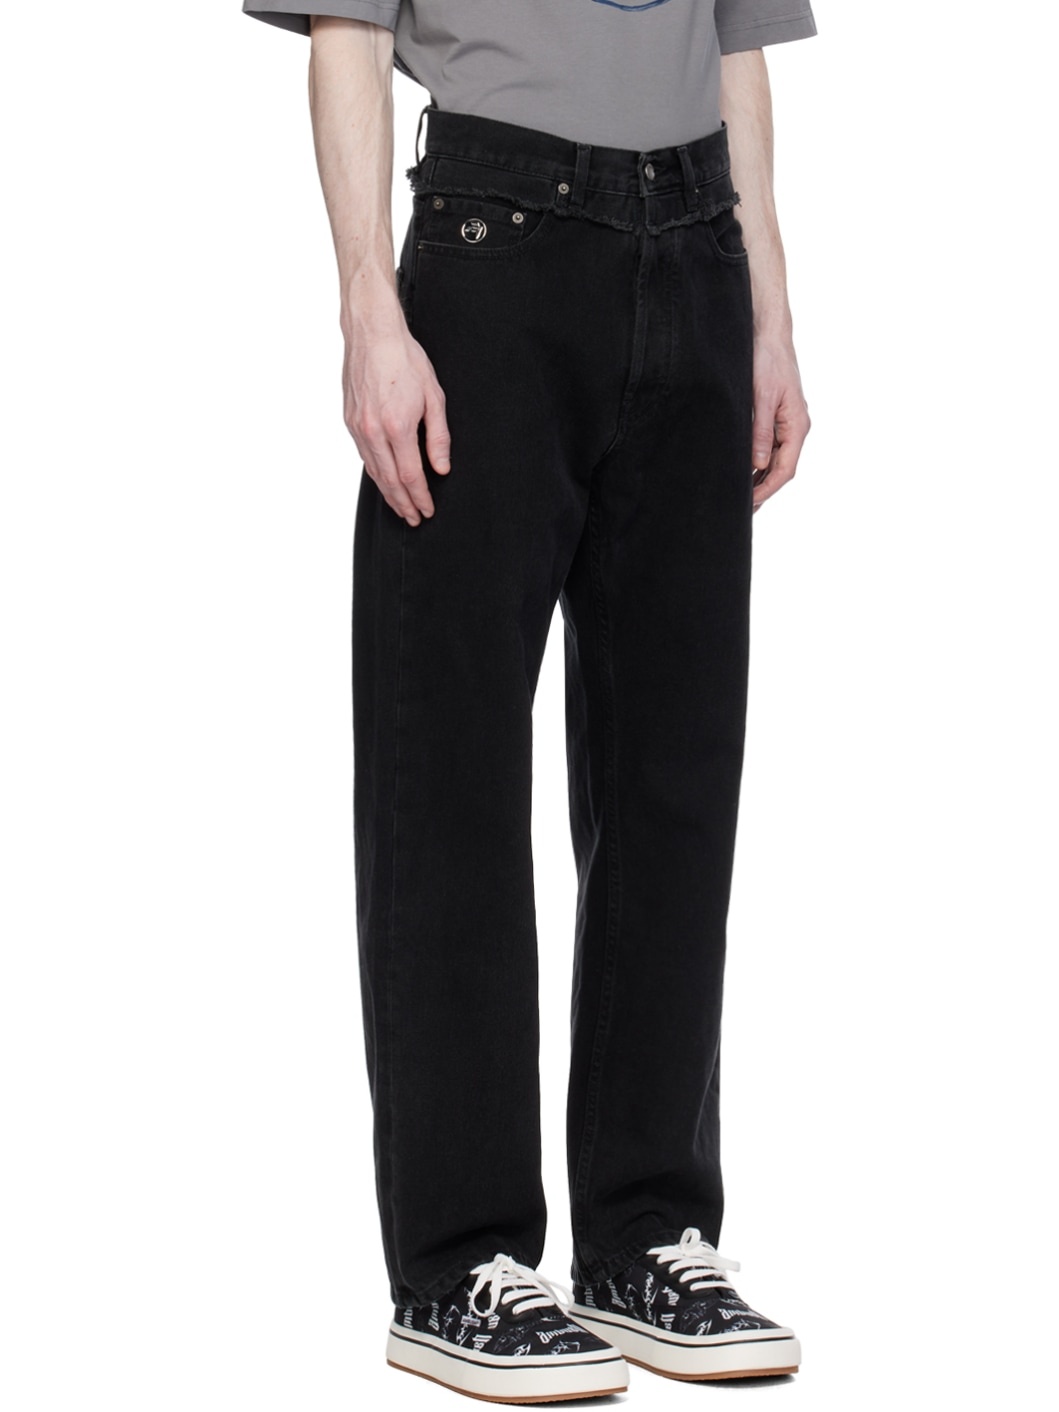 Black Waist Detail Jeans - 2